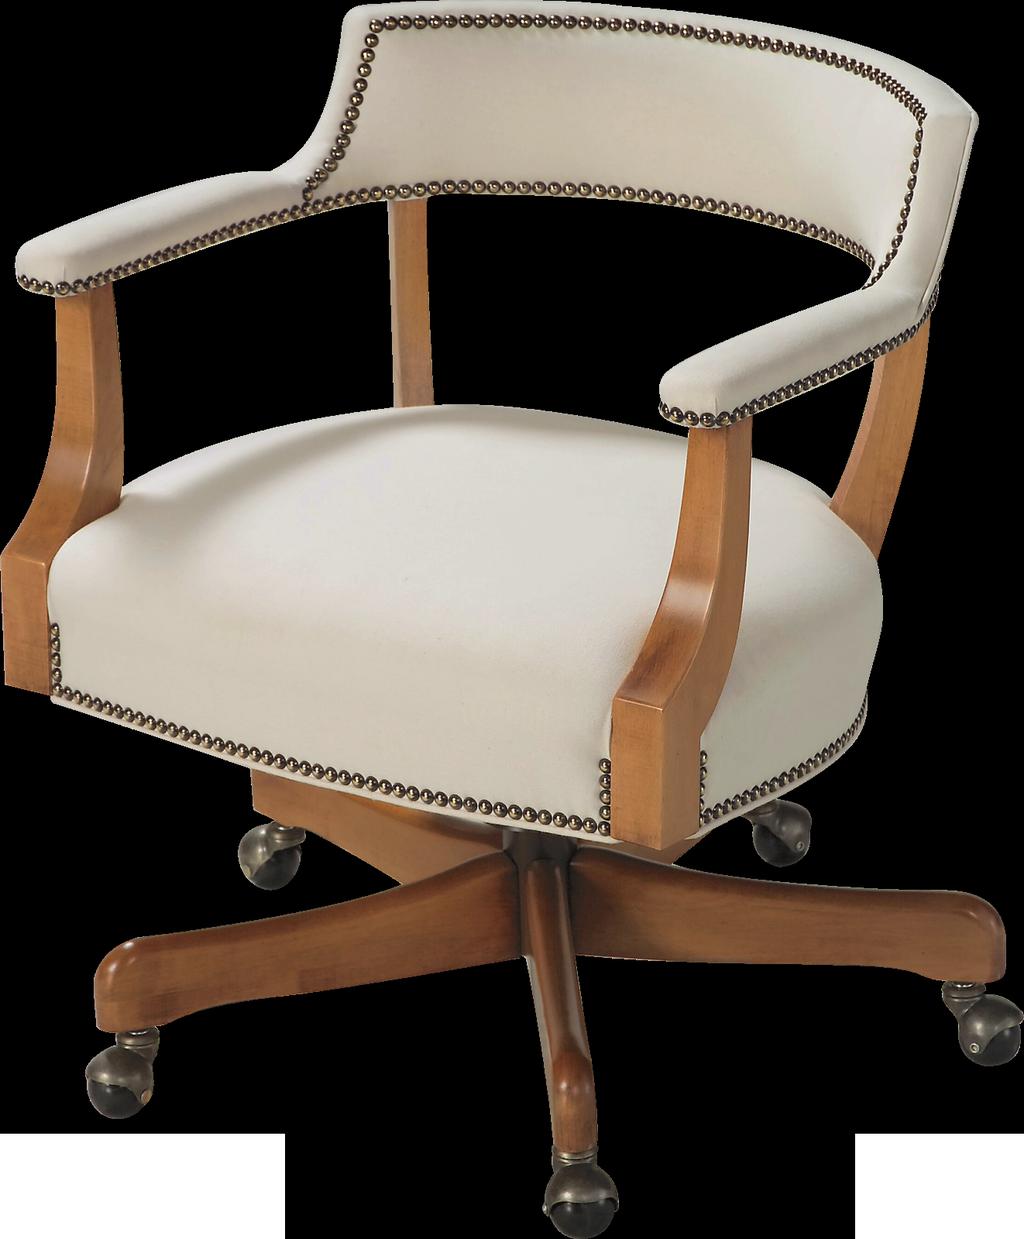 6554 Office Chair 25 W x 26 1 /2 D Base Shown: